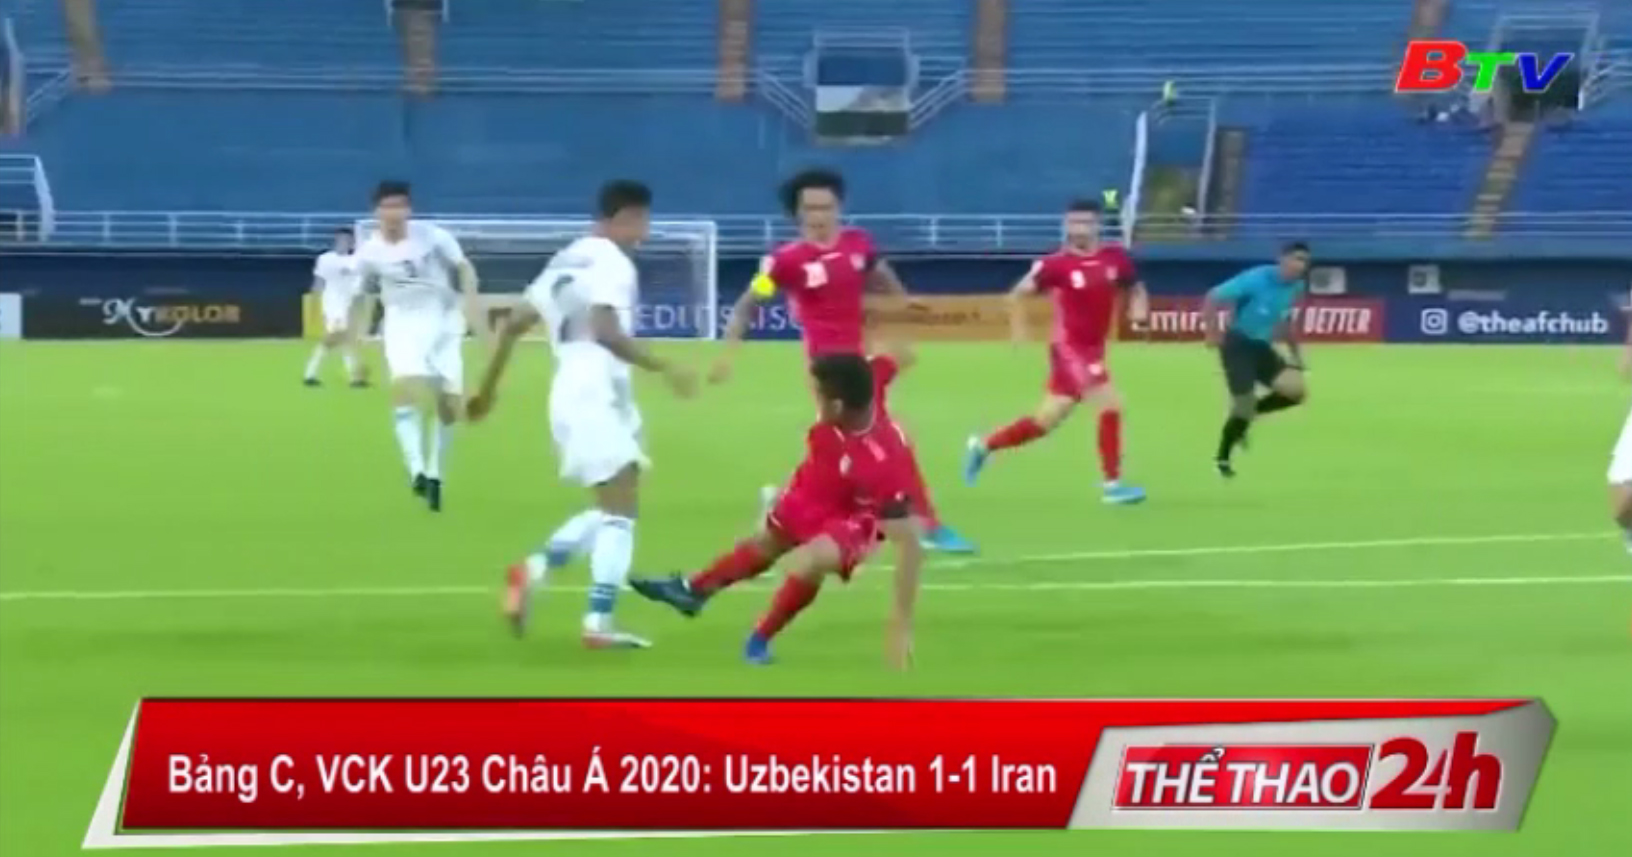 Bảng C, VCK U23 châu Á 2020 – Uzbekistan 1-1 Iran